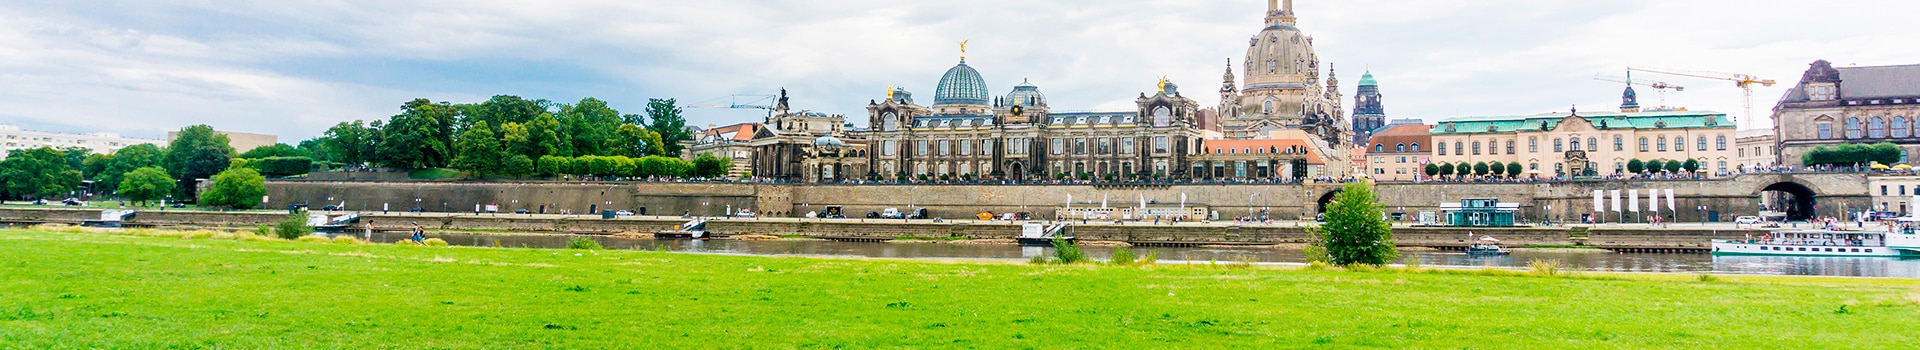 Stuttgart - Dresden